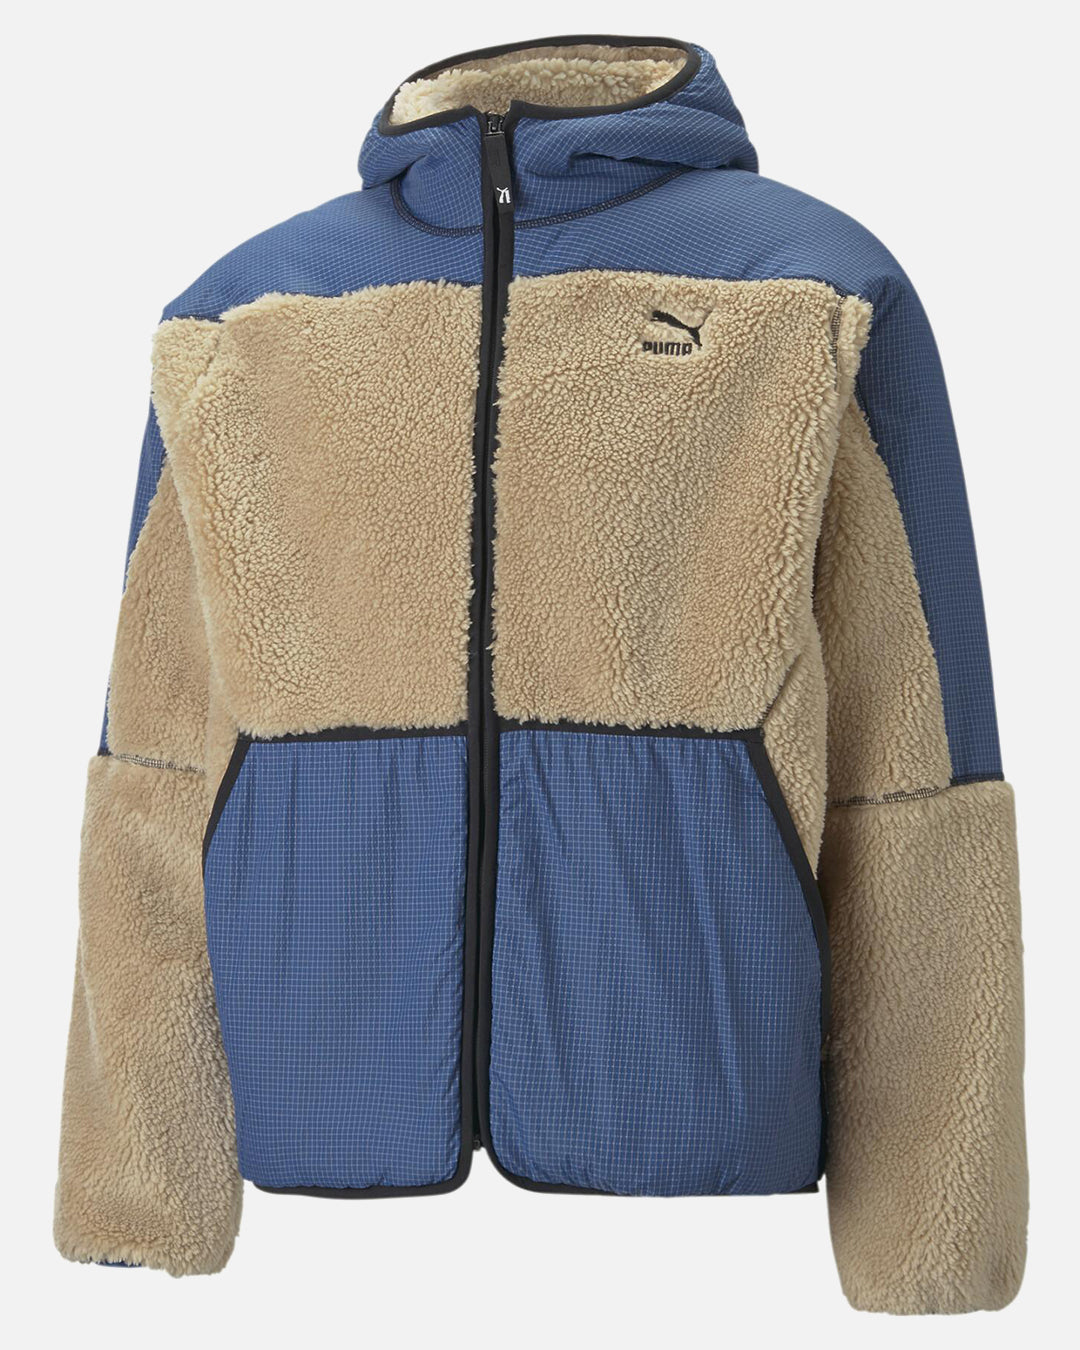 Puma Sherpa Hooded Jacket - Beige/Blue